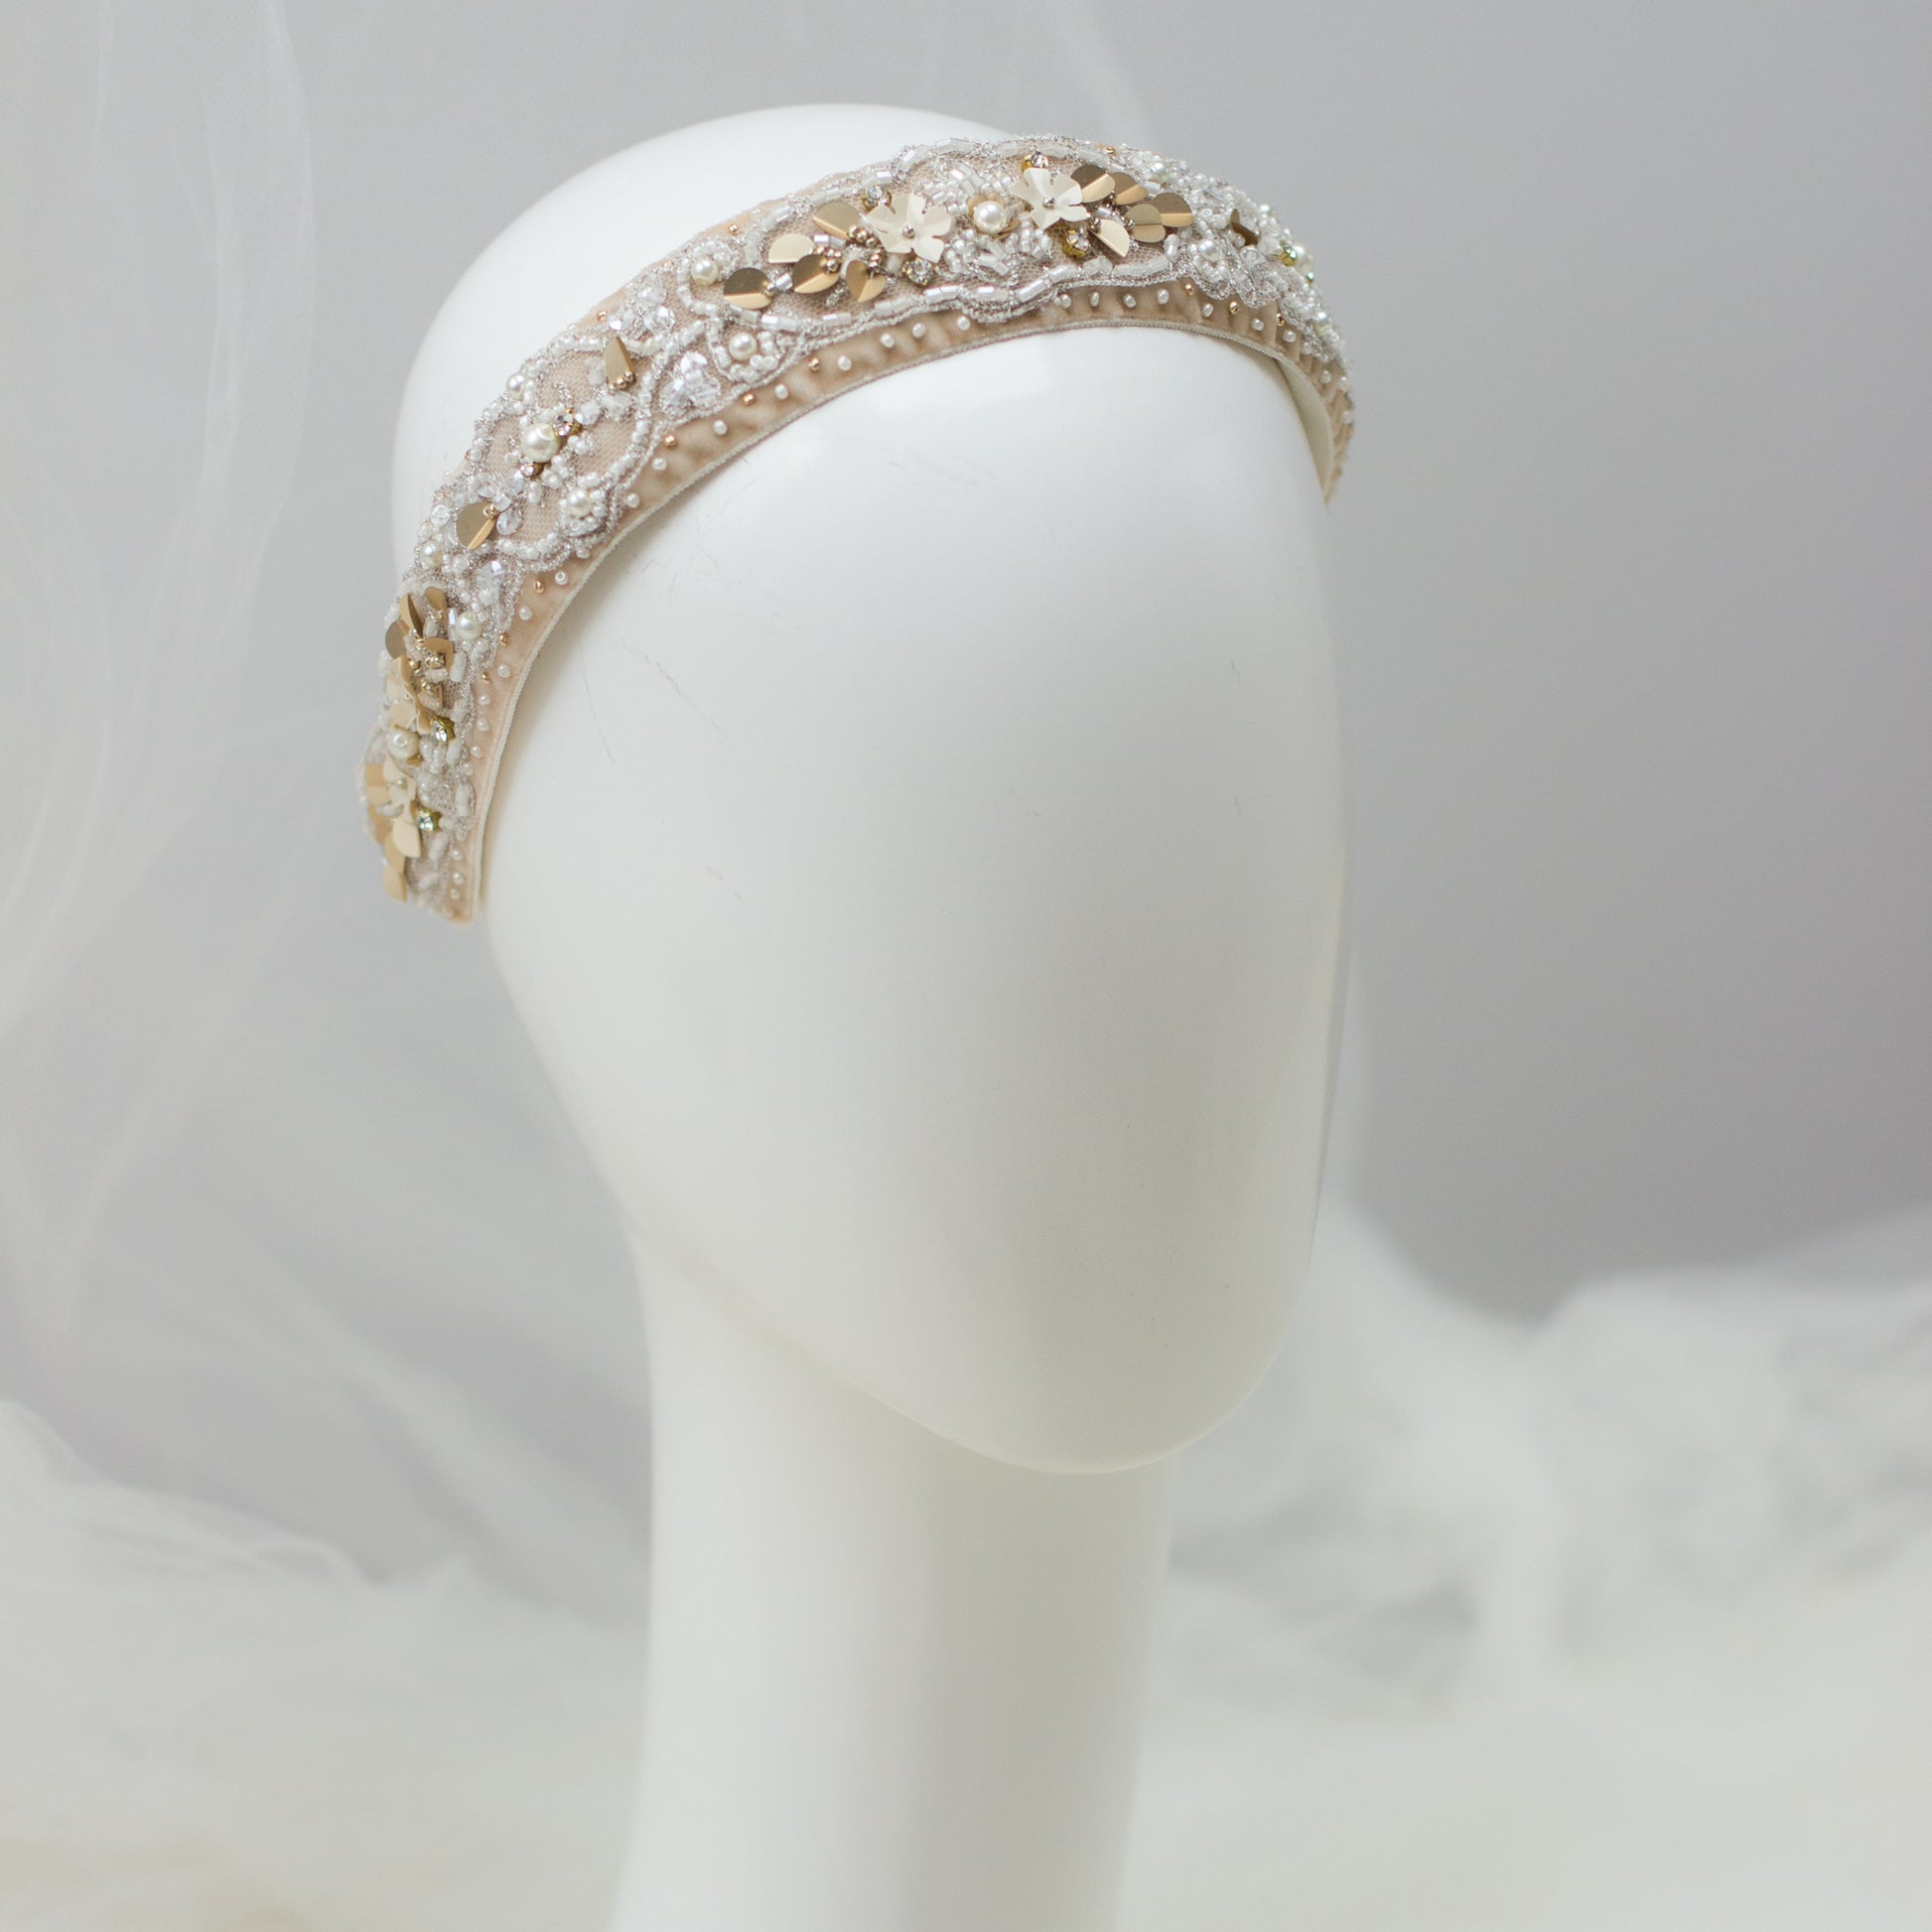 Velour Champagne headband. Velvet Bridal headpiece. Wedding hair accessories. Lace headpiece. Embroidered Head fascinator. Bridesmaid, Flower girl headband. Velour headpiece. Antique silver & gold headpiece.